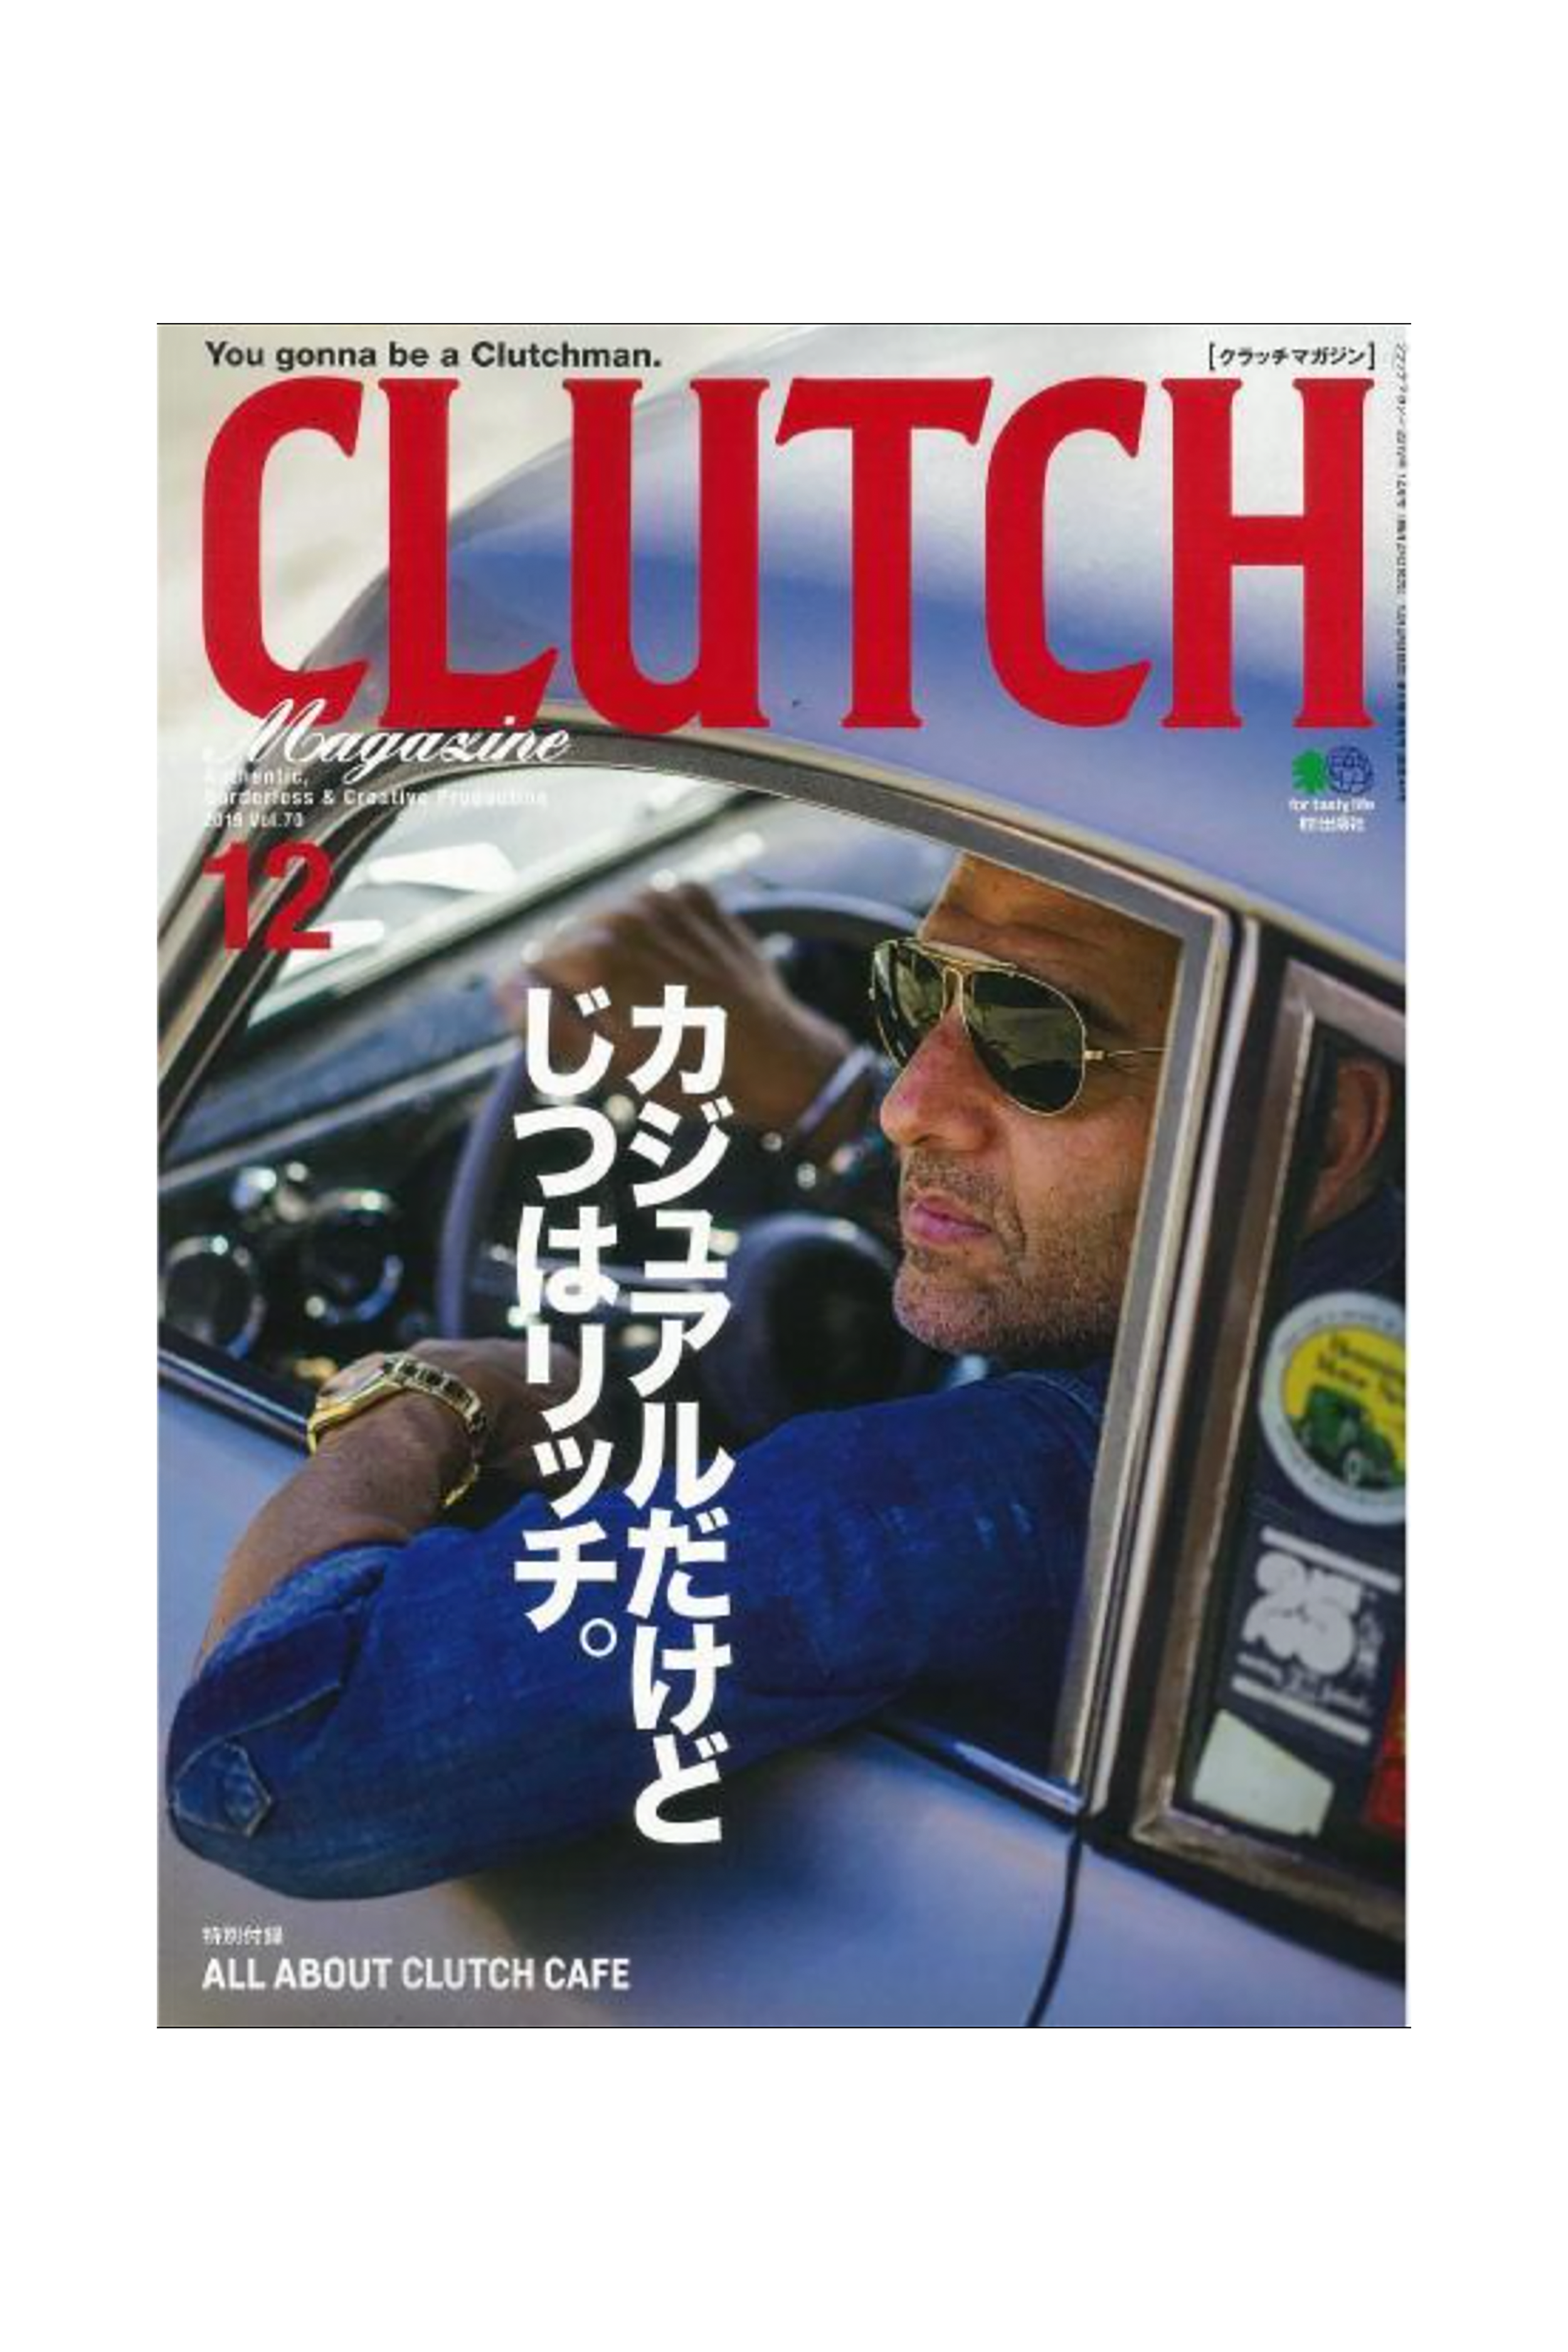 Clutch Magazine Vol 70